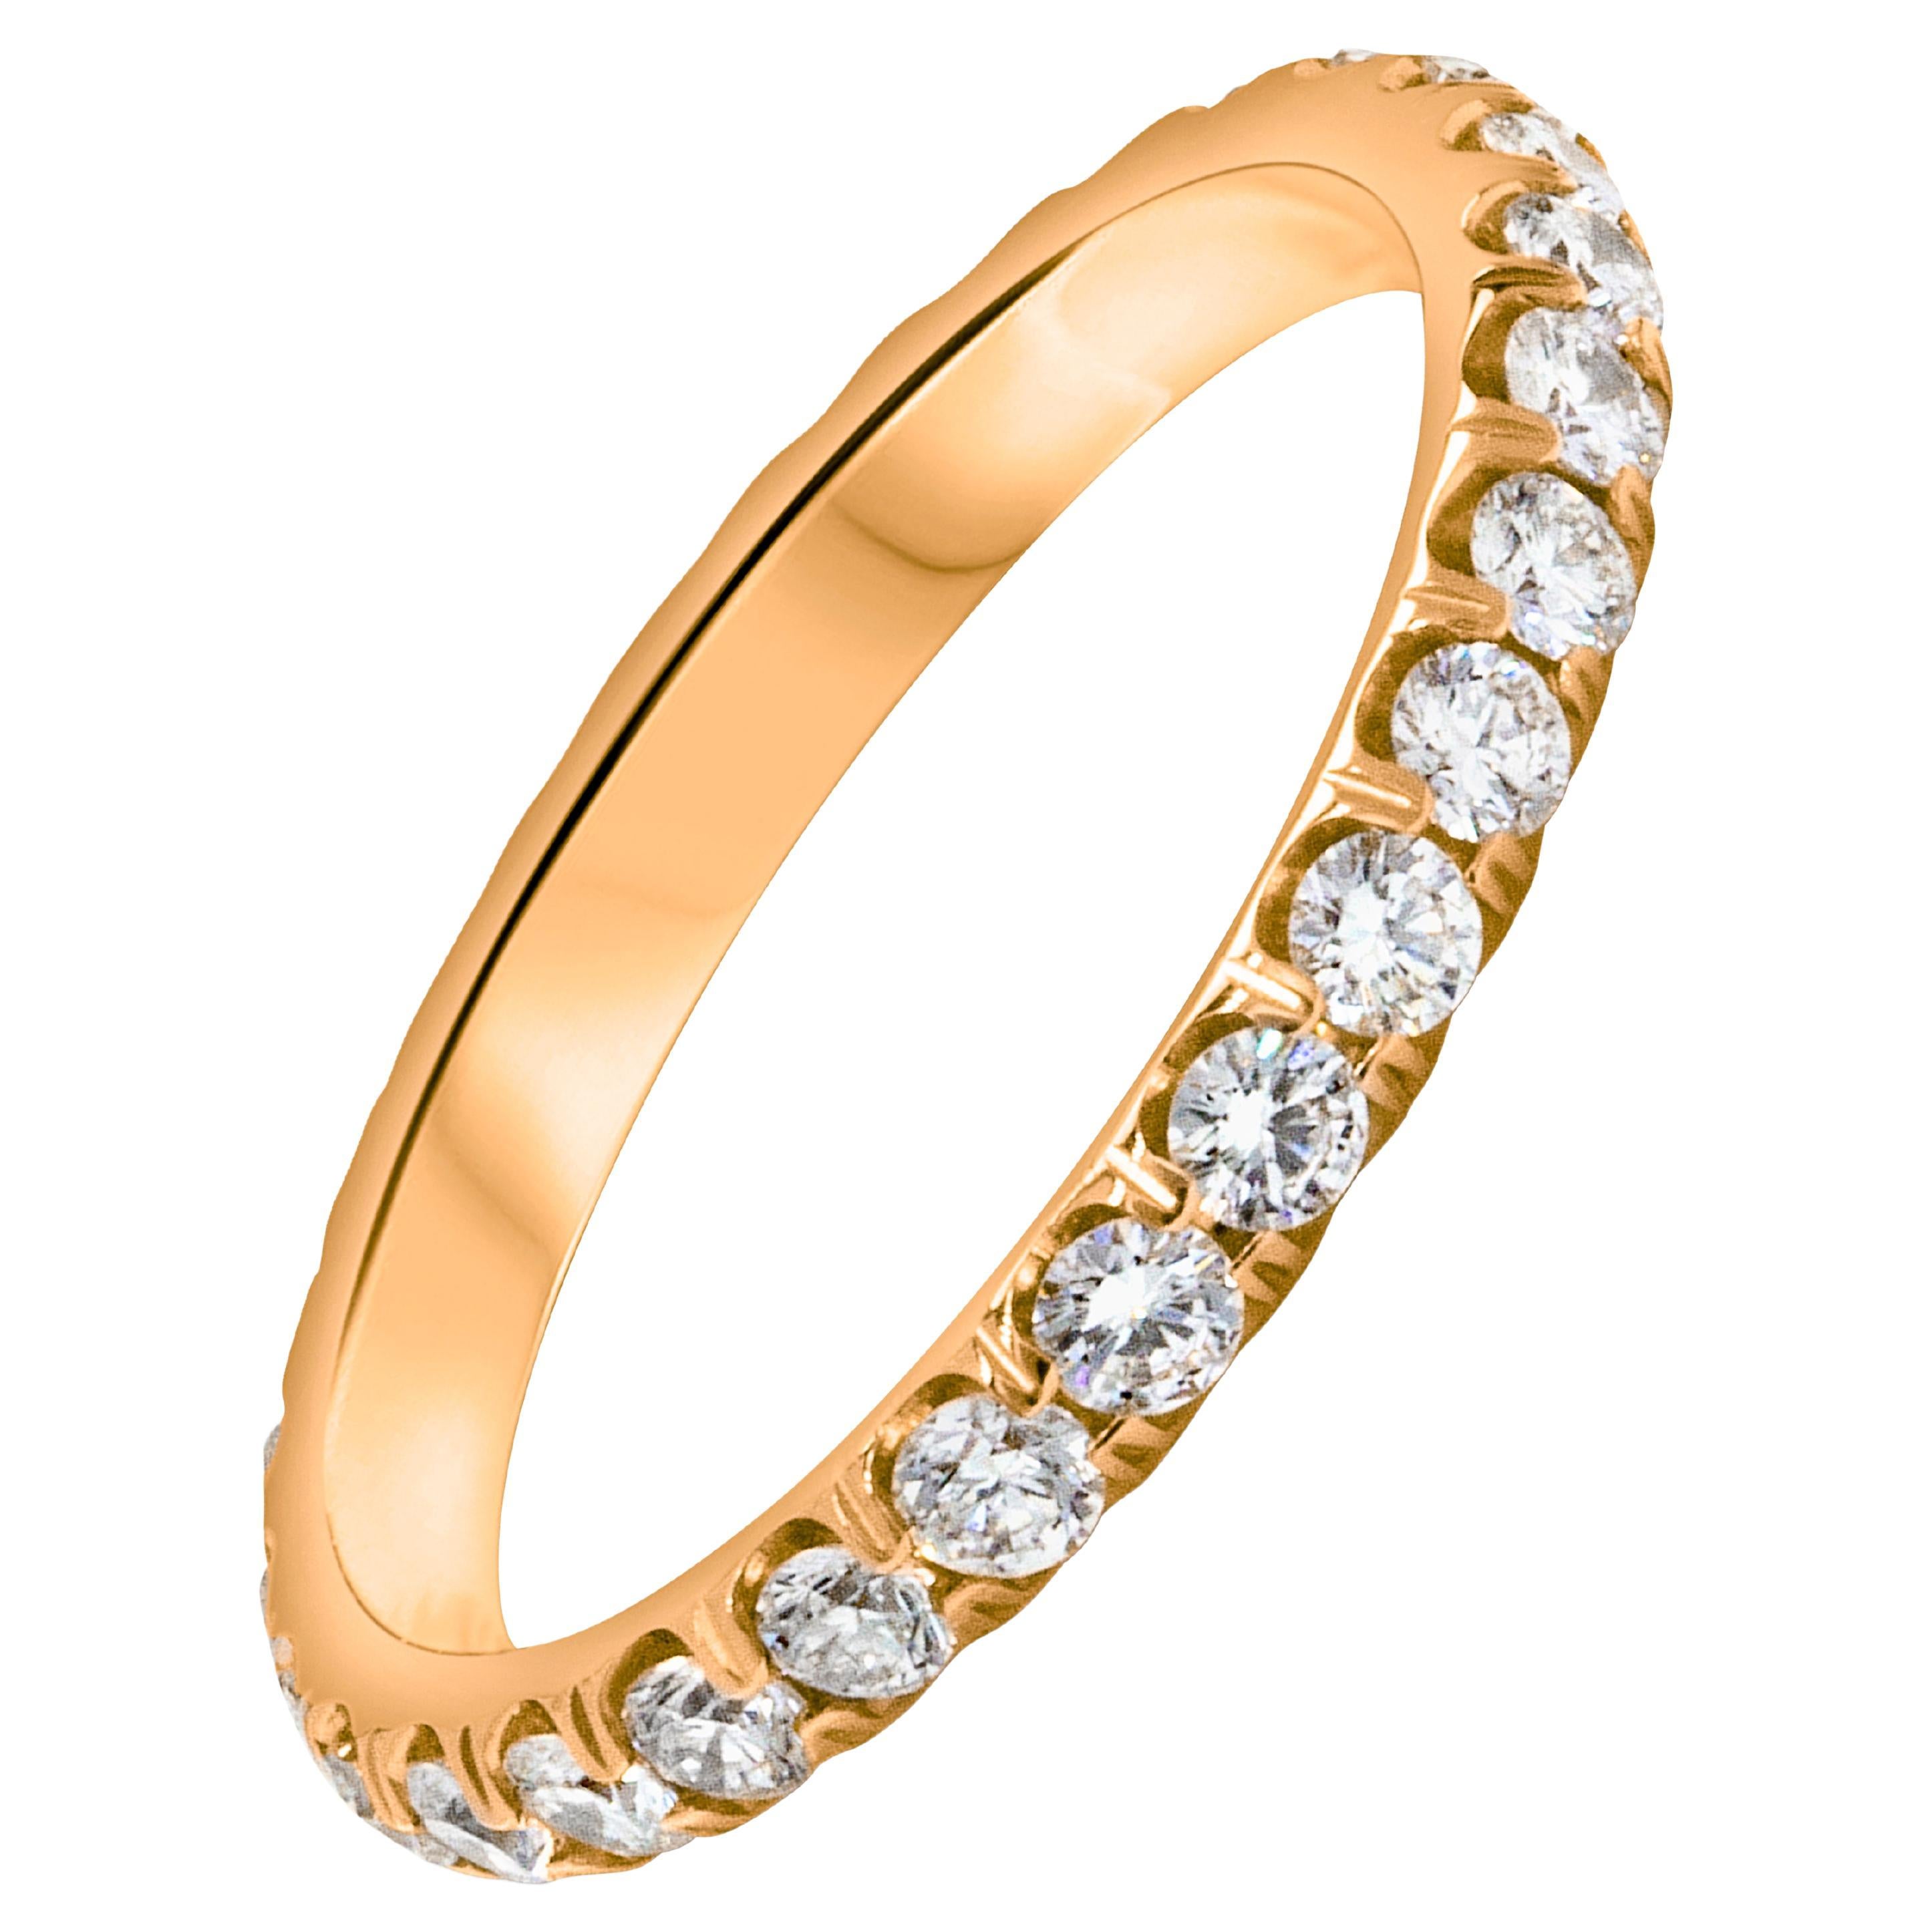 Roman Malakov 1.03 Carat Total Round Diamond Pave-Set Eternity Wedding Band Ring For Sale